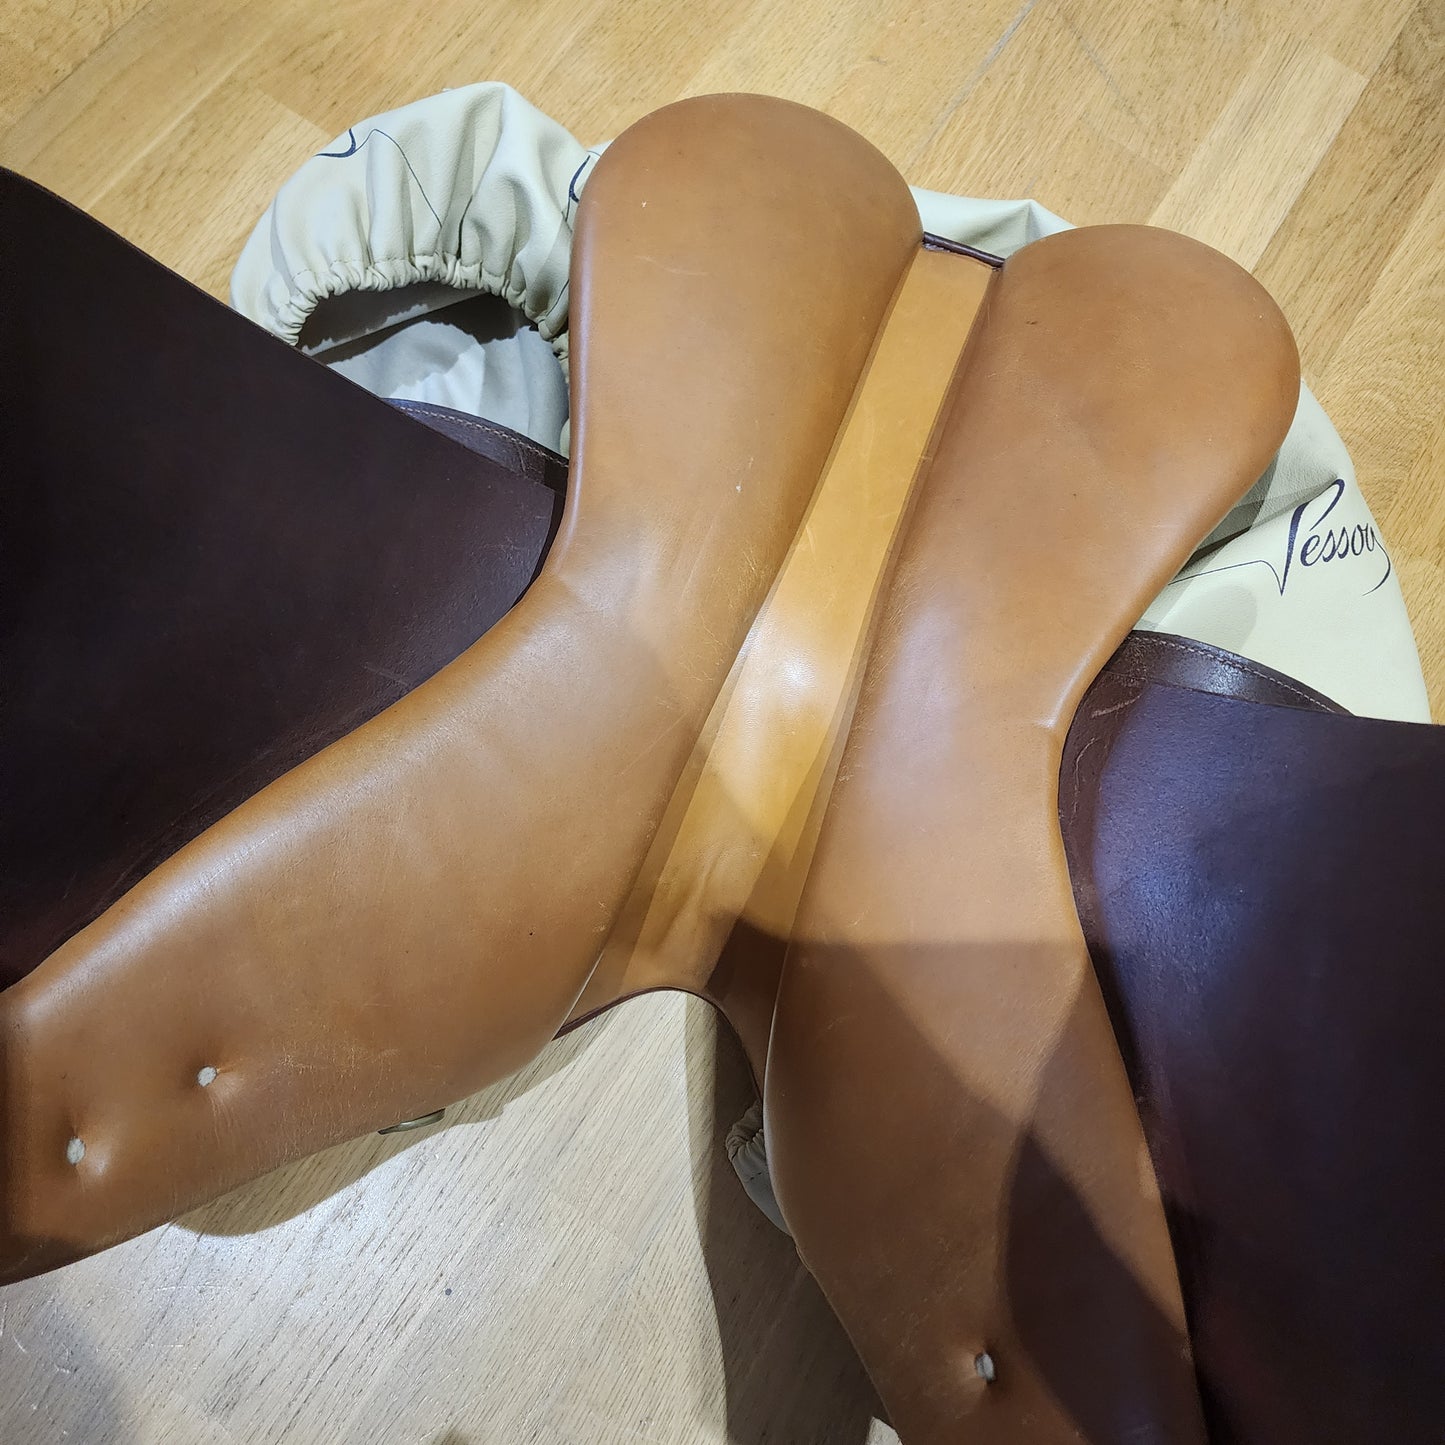 Passoa brown leather jump saddle 16.5" medium